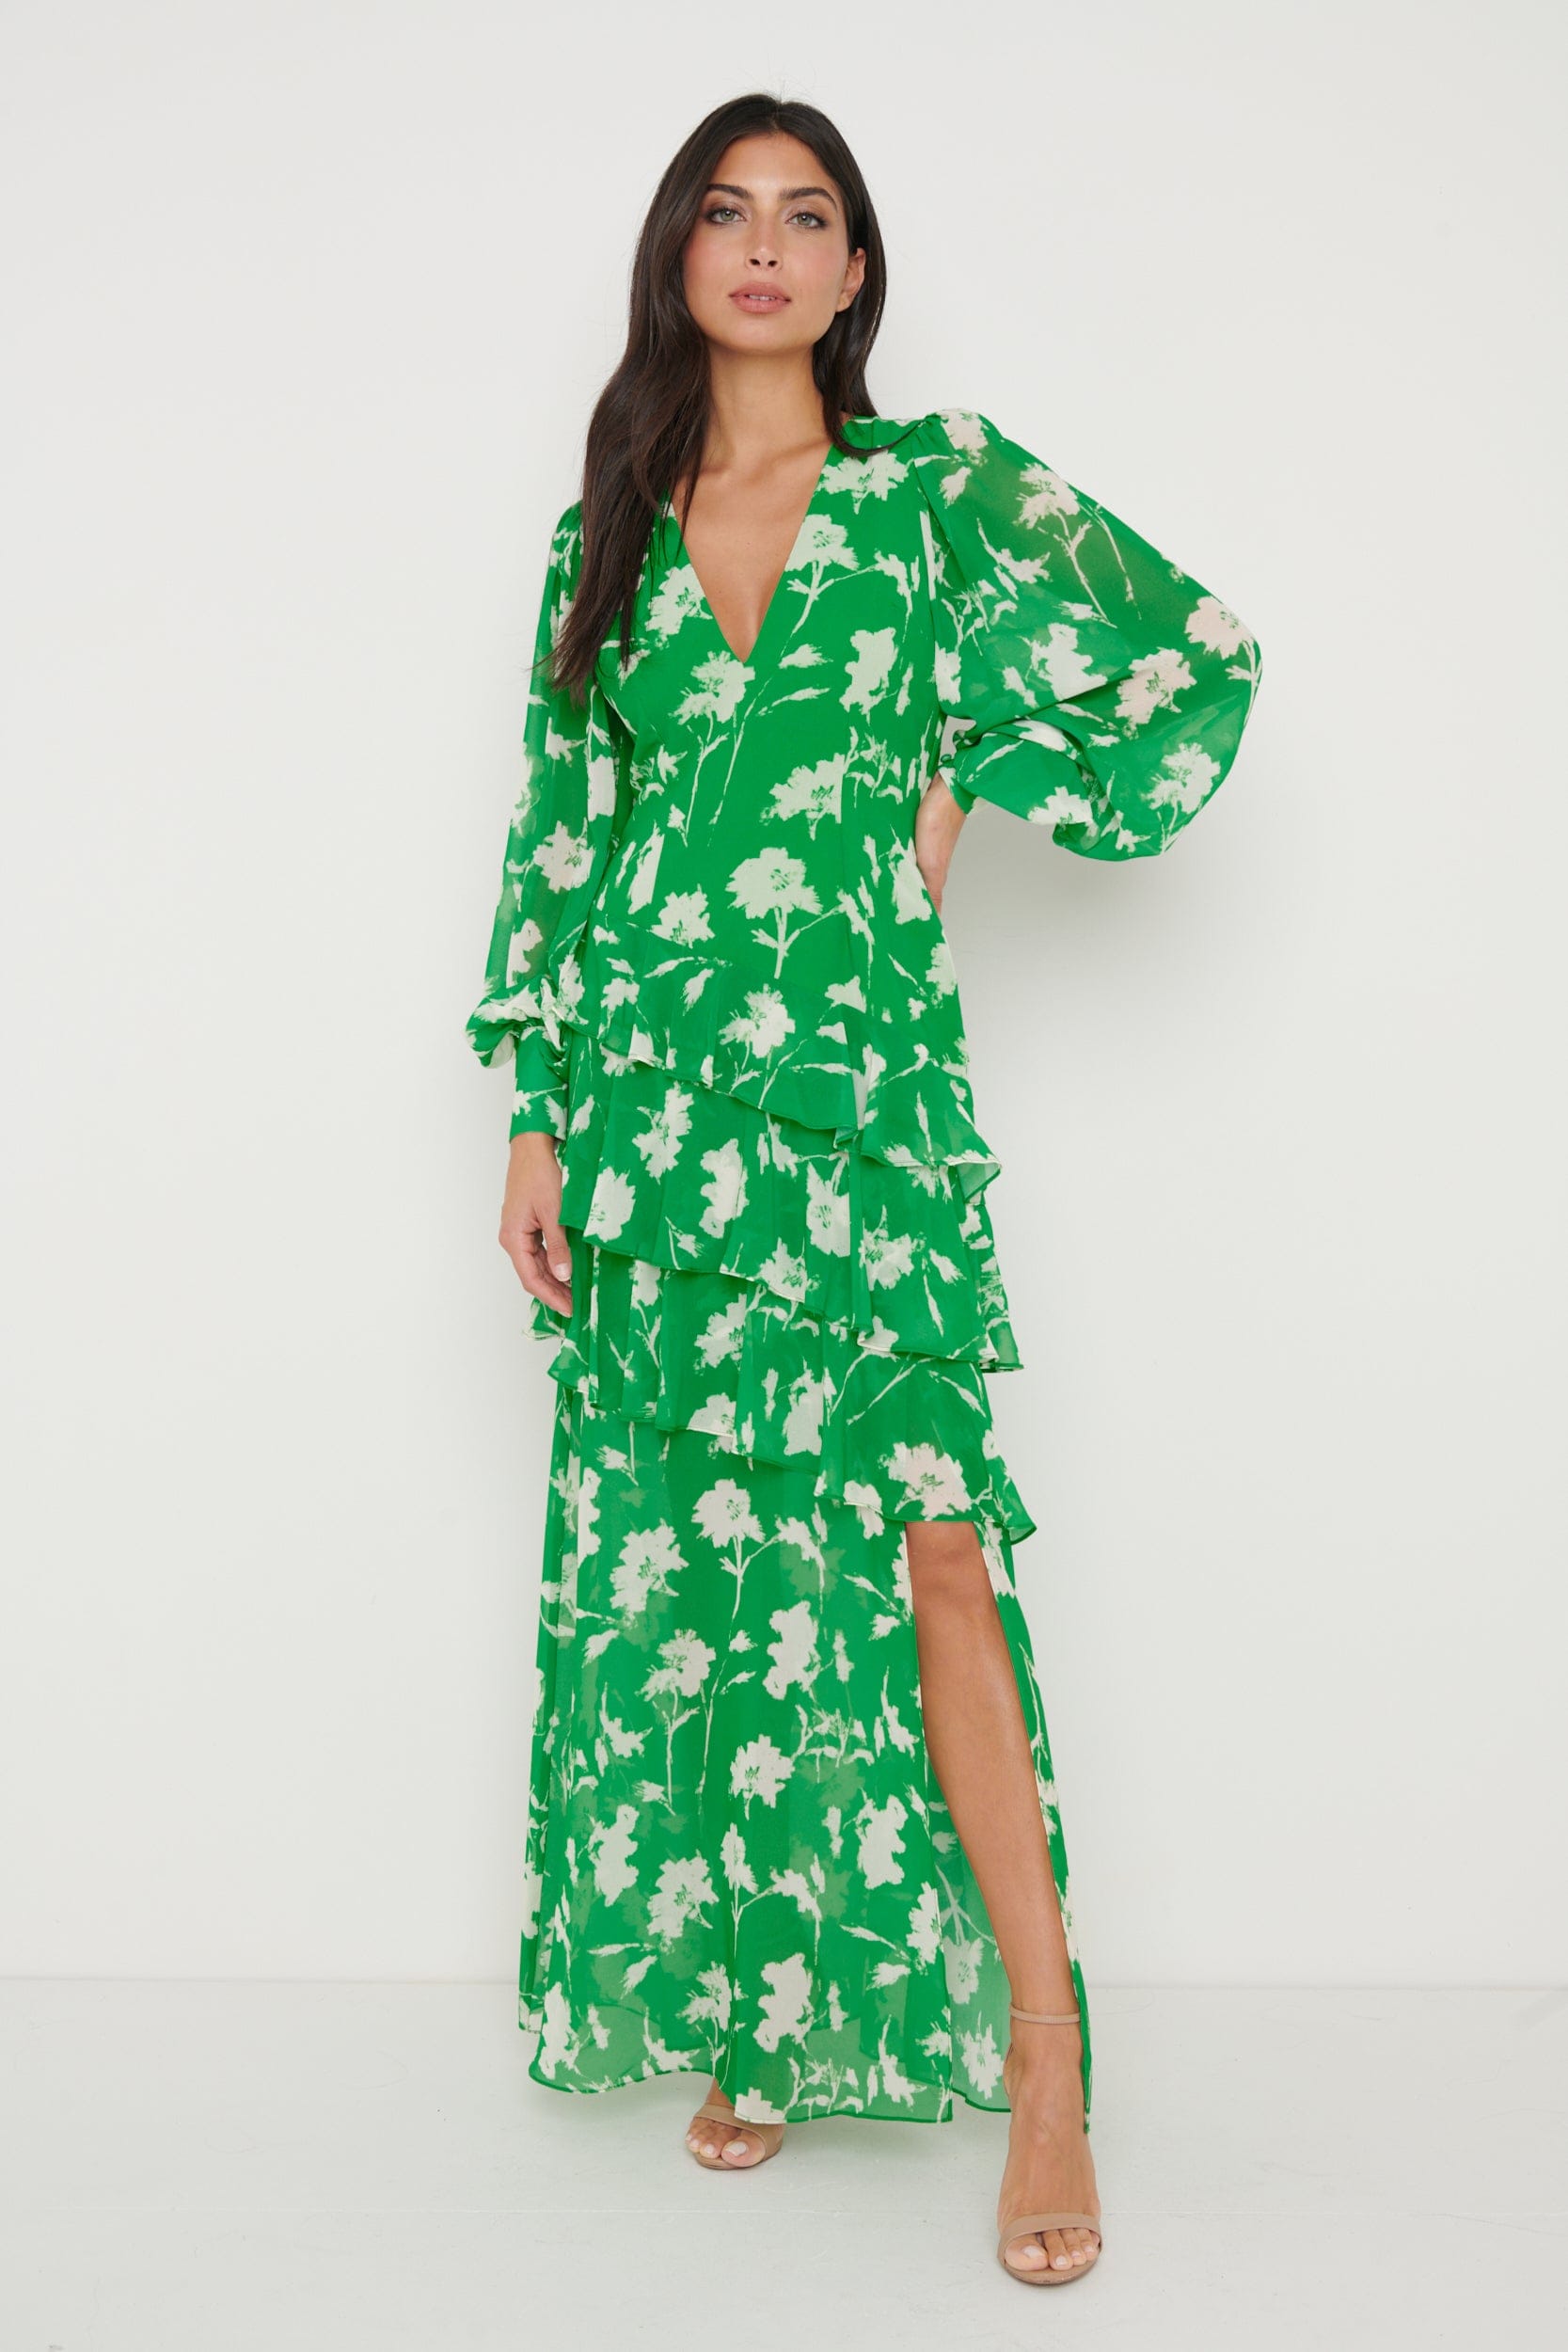 Sabrinna Backless Ruffle Dress - Green Floral, 22